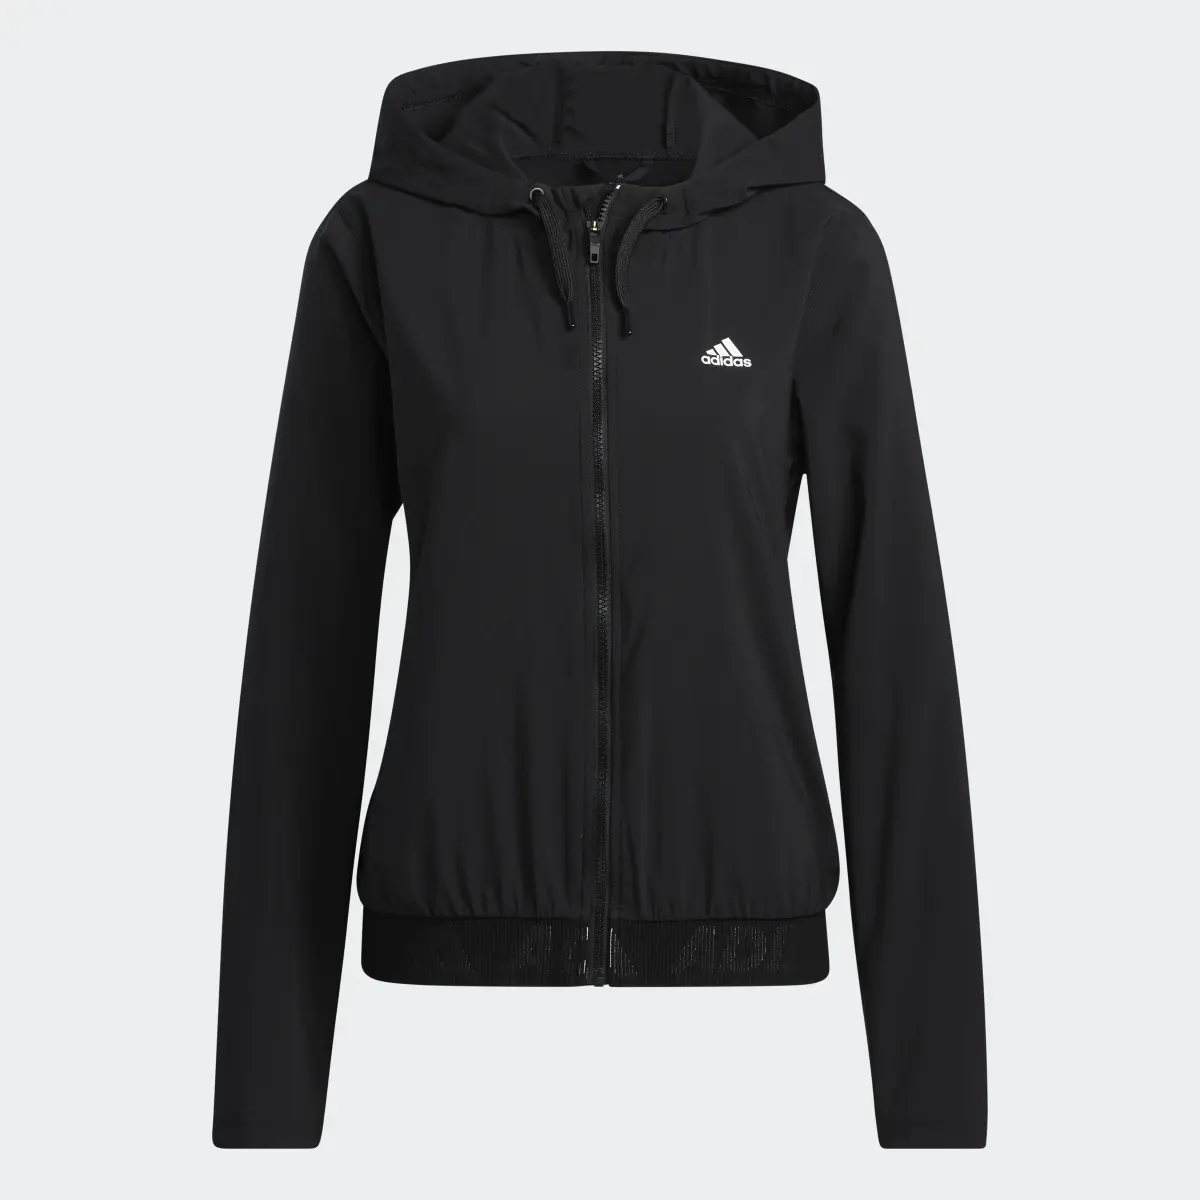 Adidas Branded Elastic Layering Jacket. 1